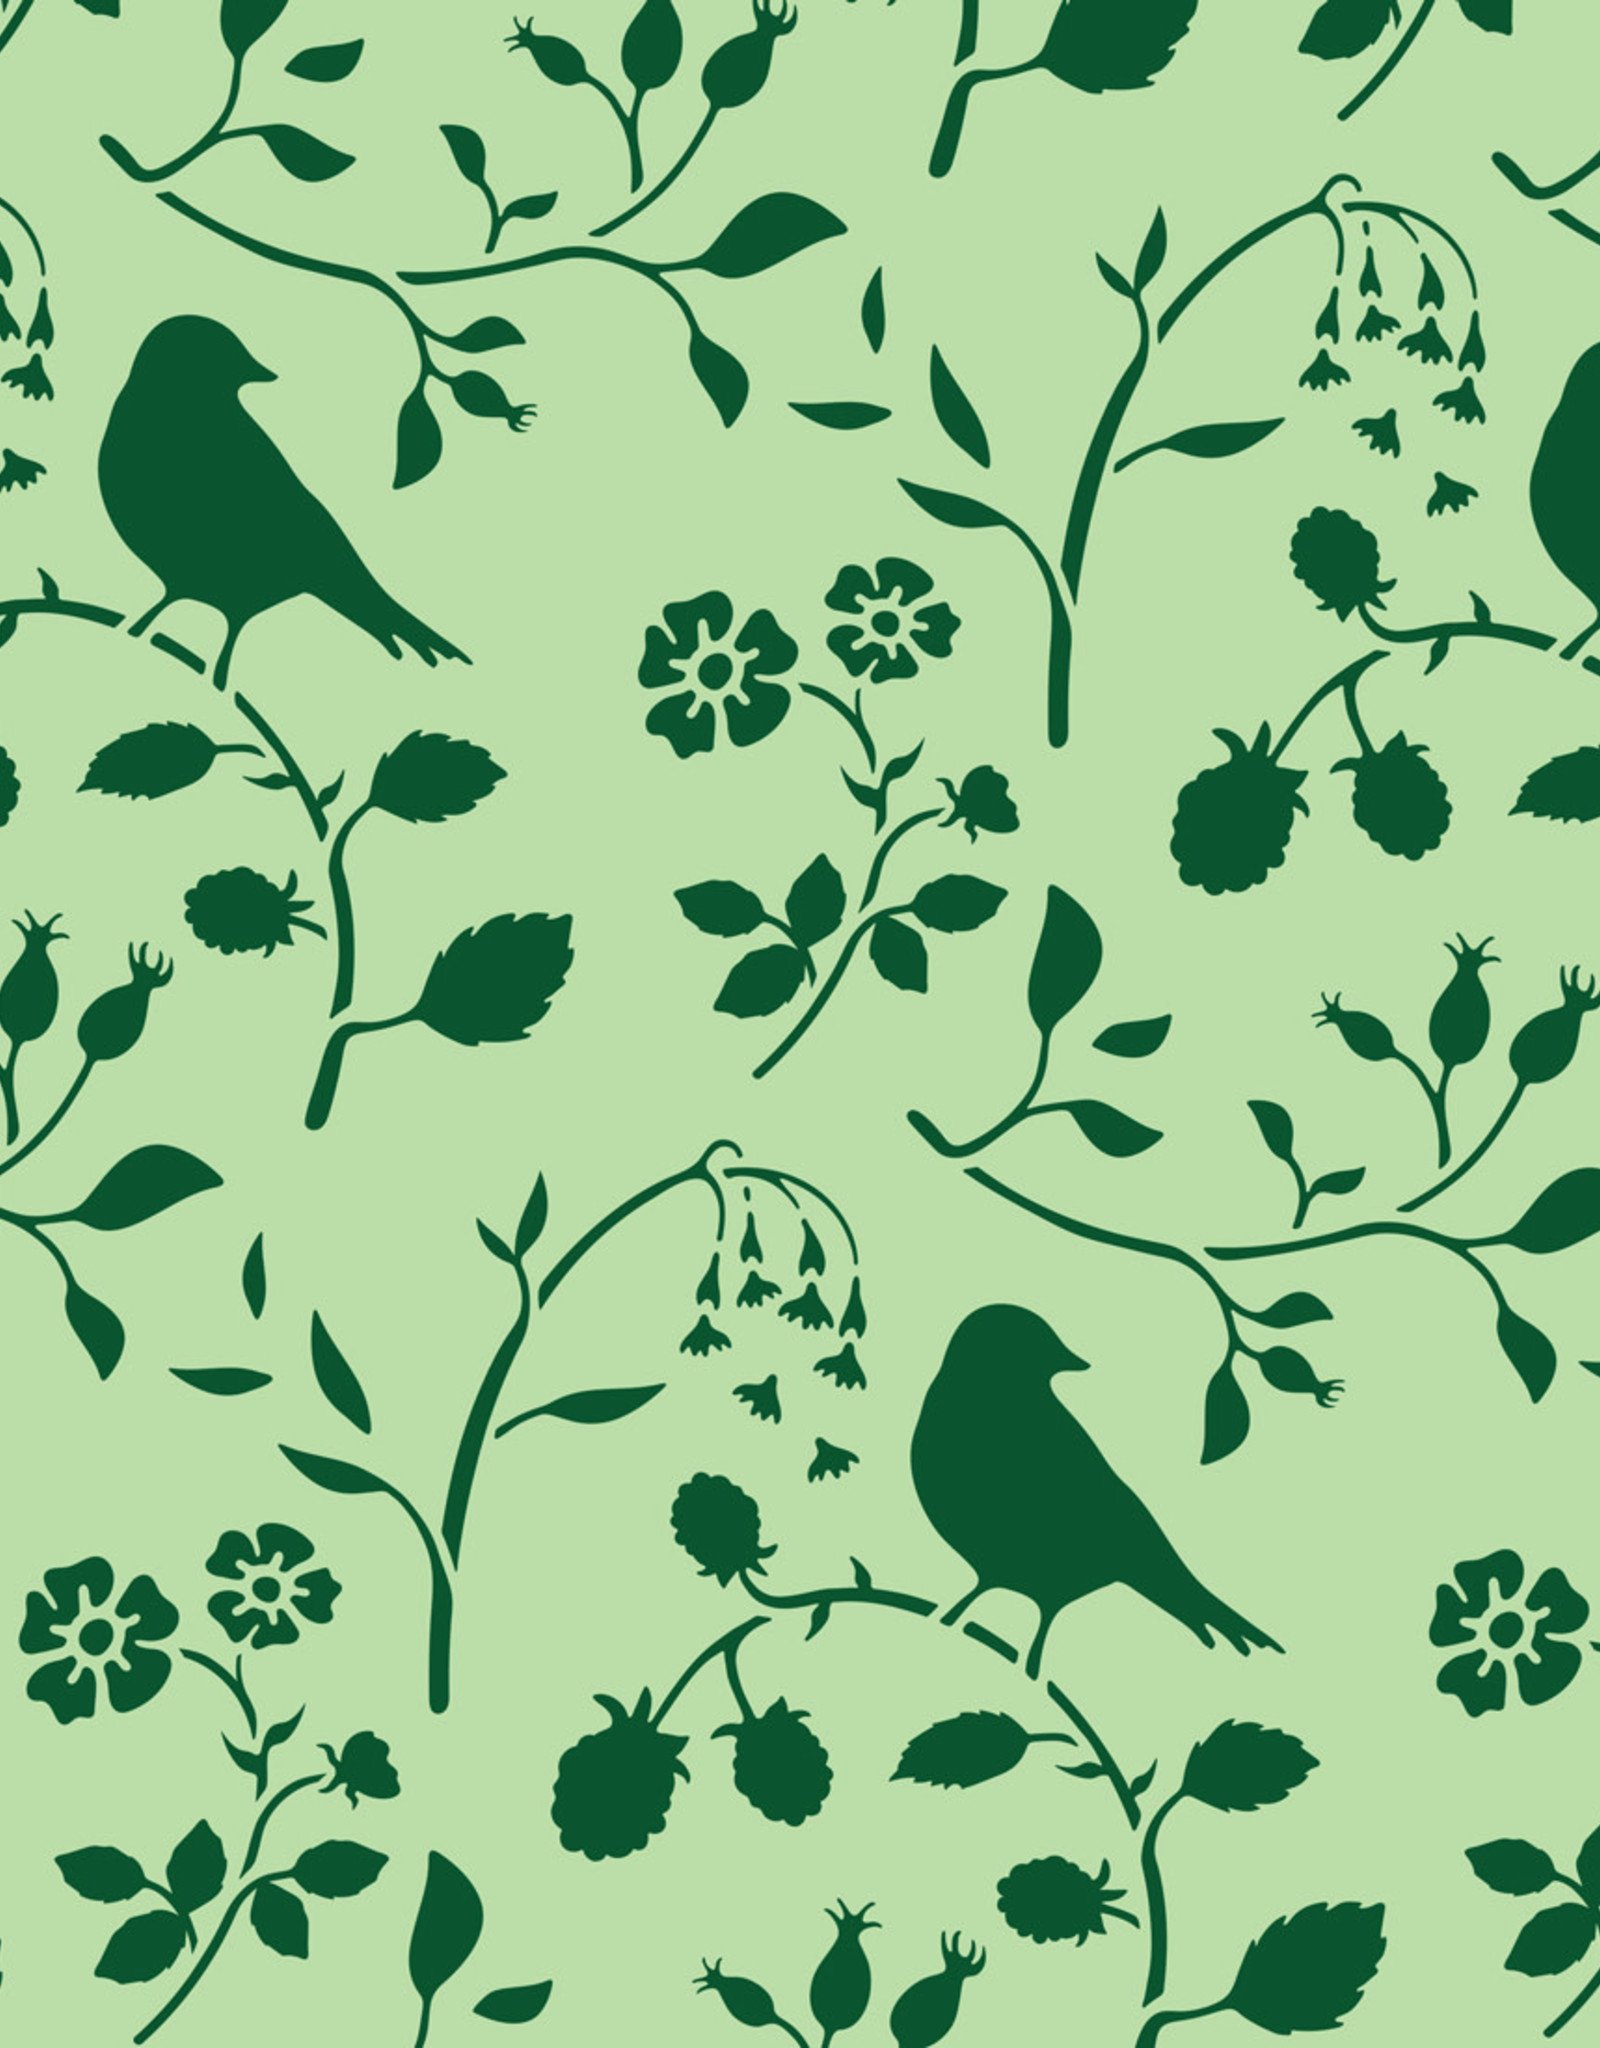 Annie Sloan Countryside Bird Stencil by Annie Sloan